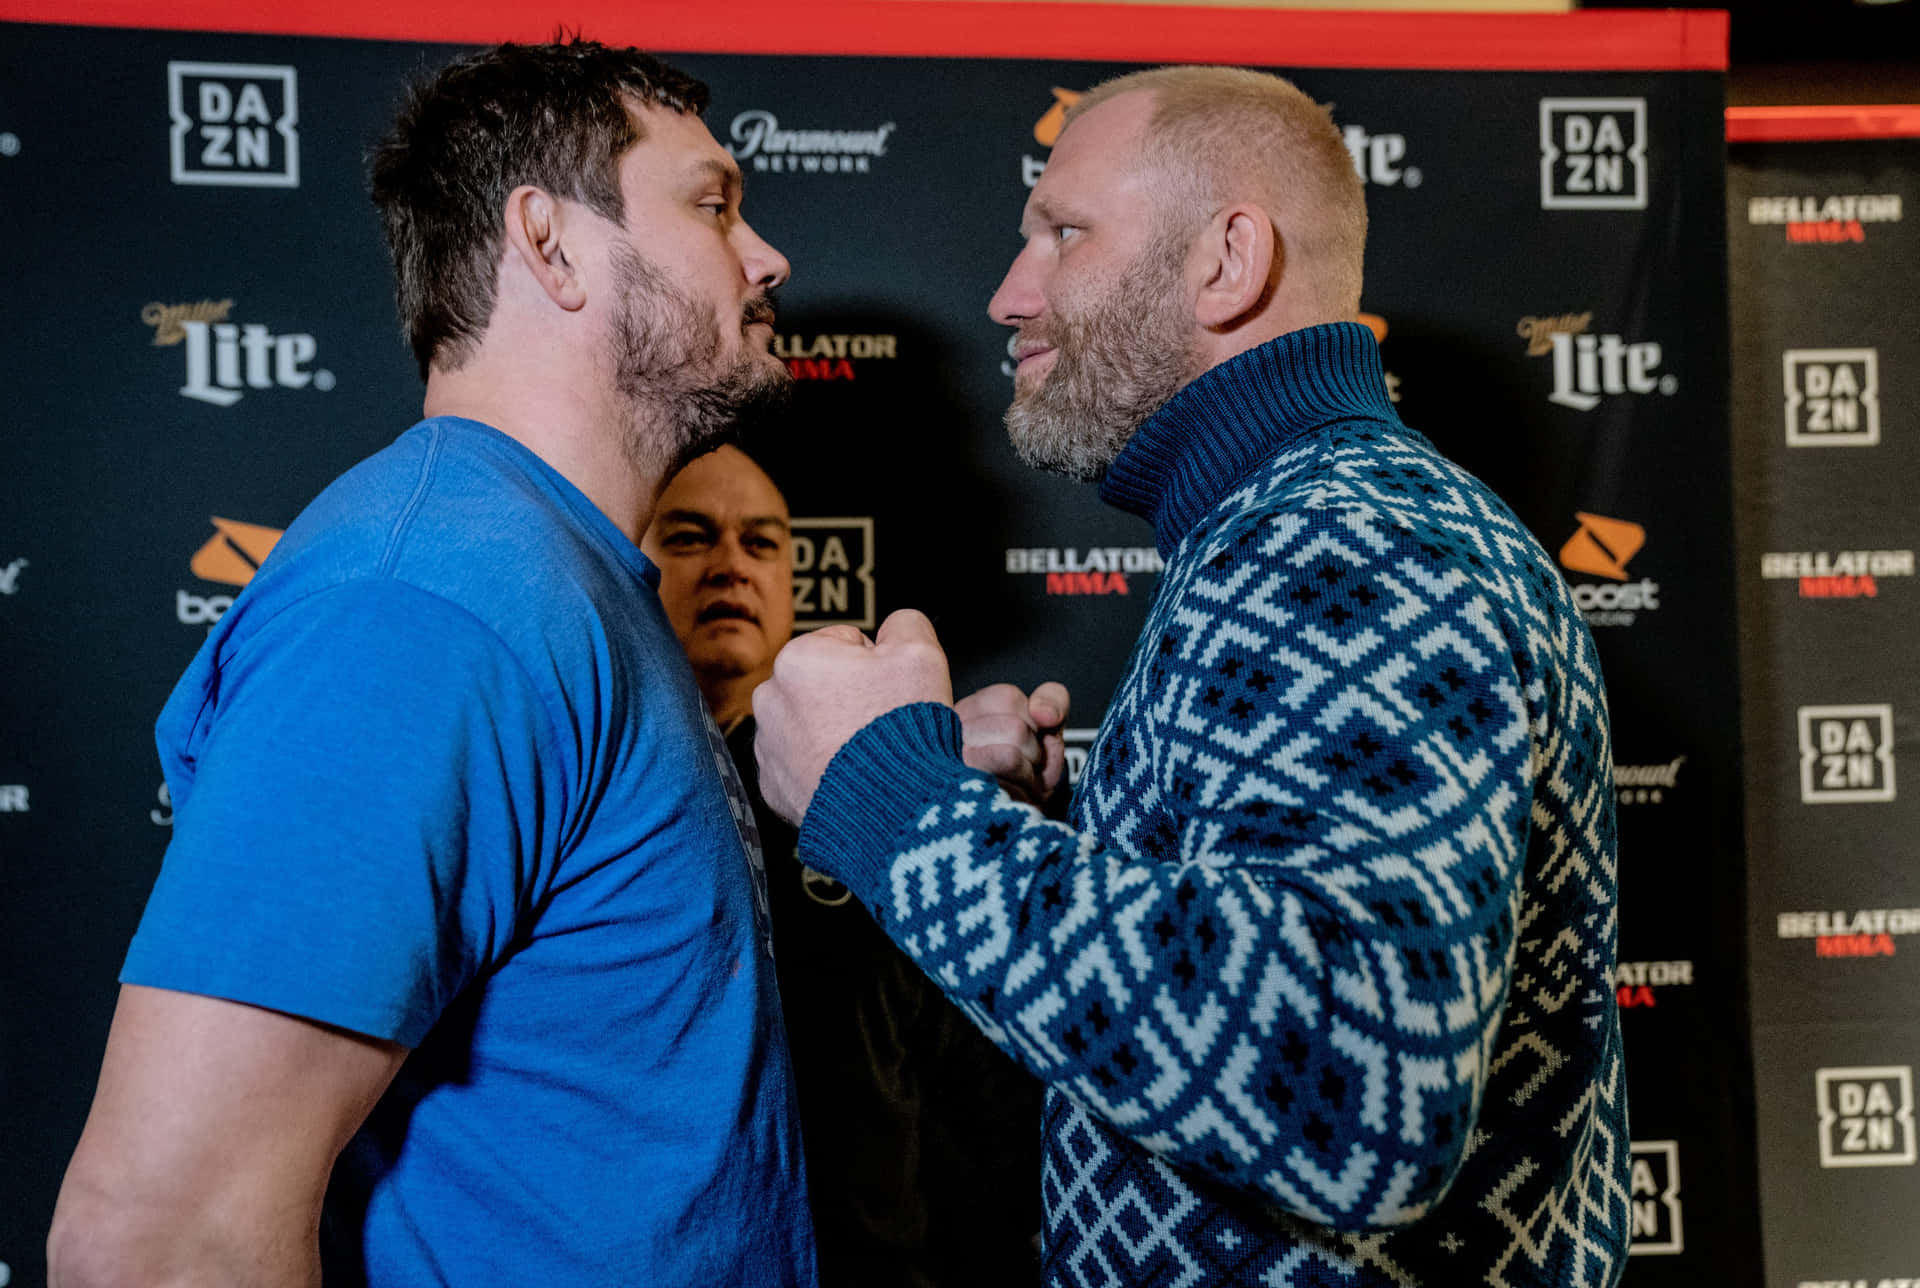 Russian MMA Fighter Sergei Kharitonov Versus Matt Mitrione Bellator 215 Wallpaper